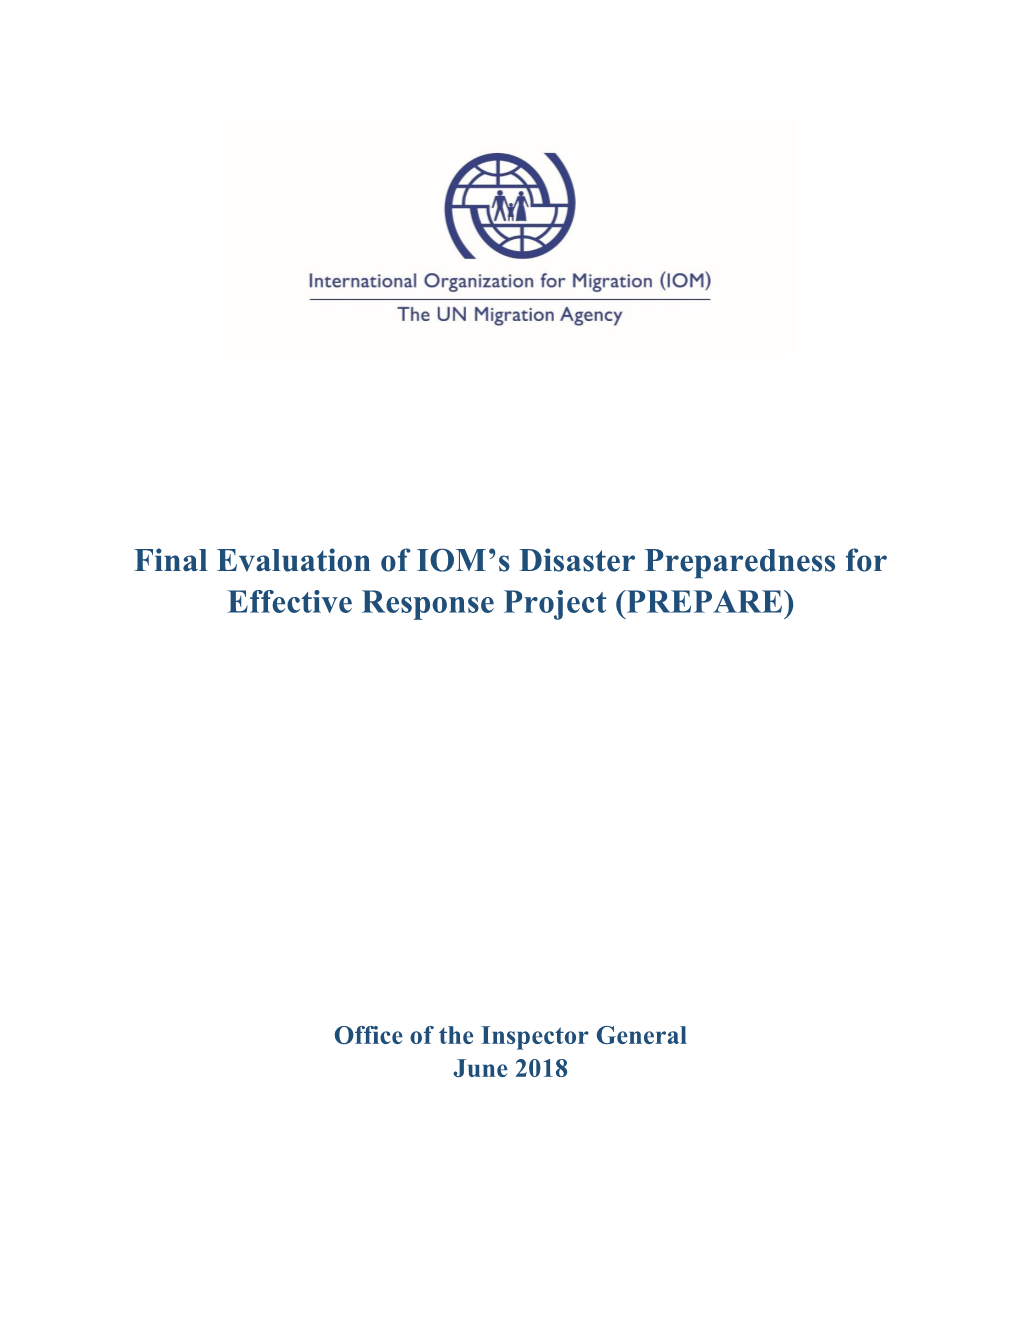 Final Evaluation of IOM's Disaster Preparedness for Effective